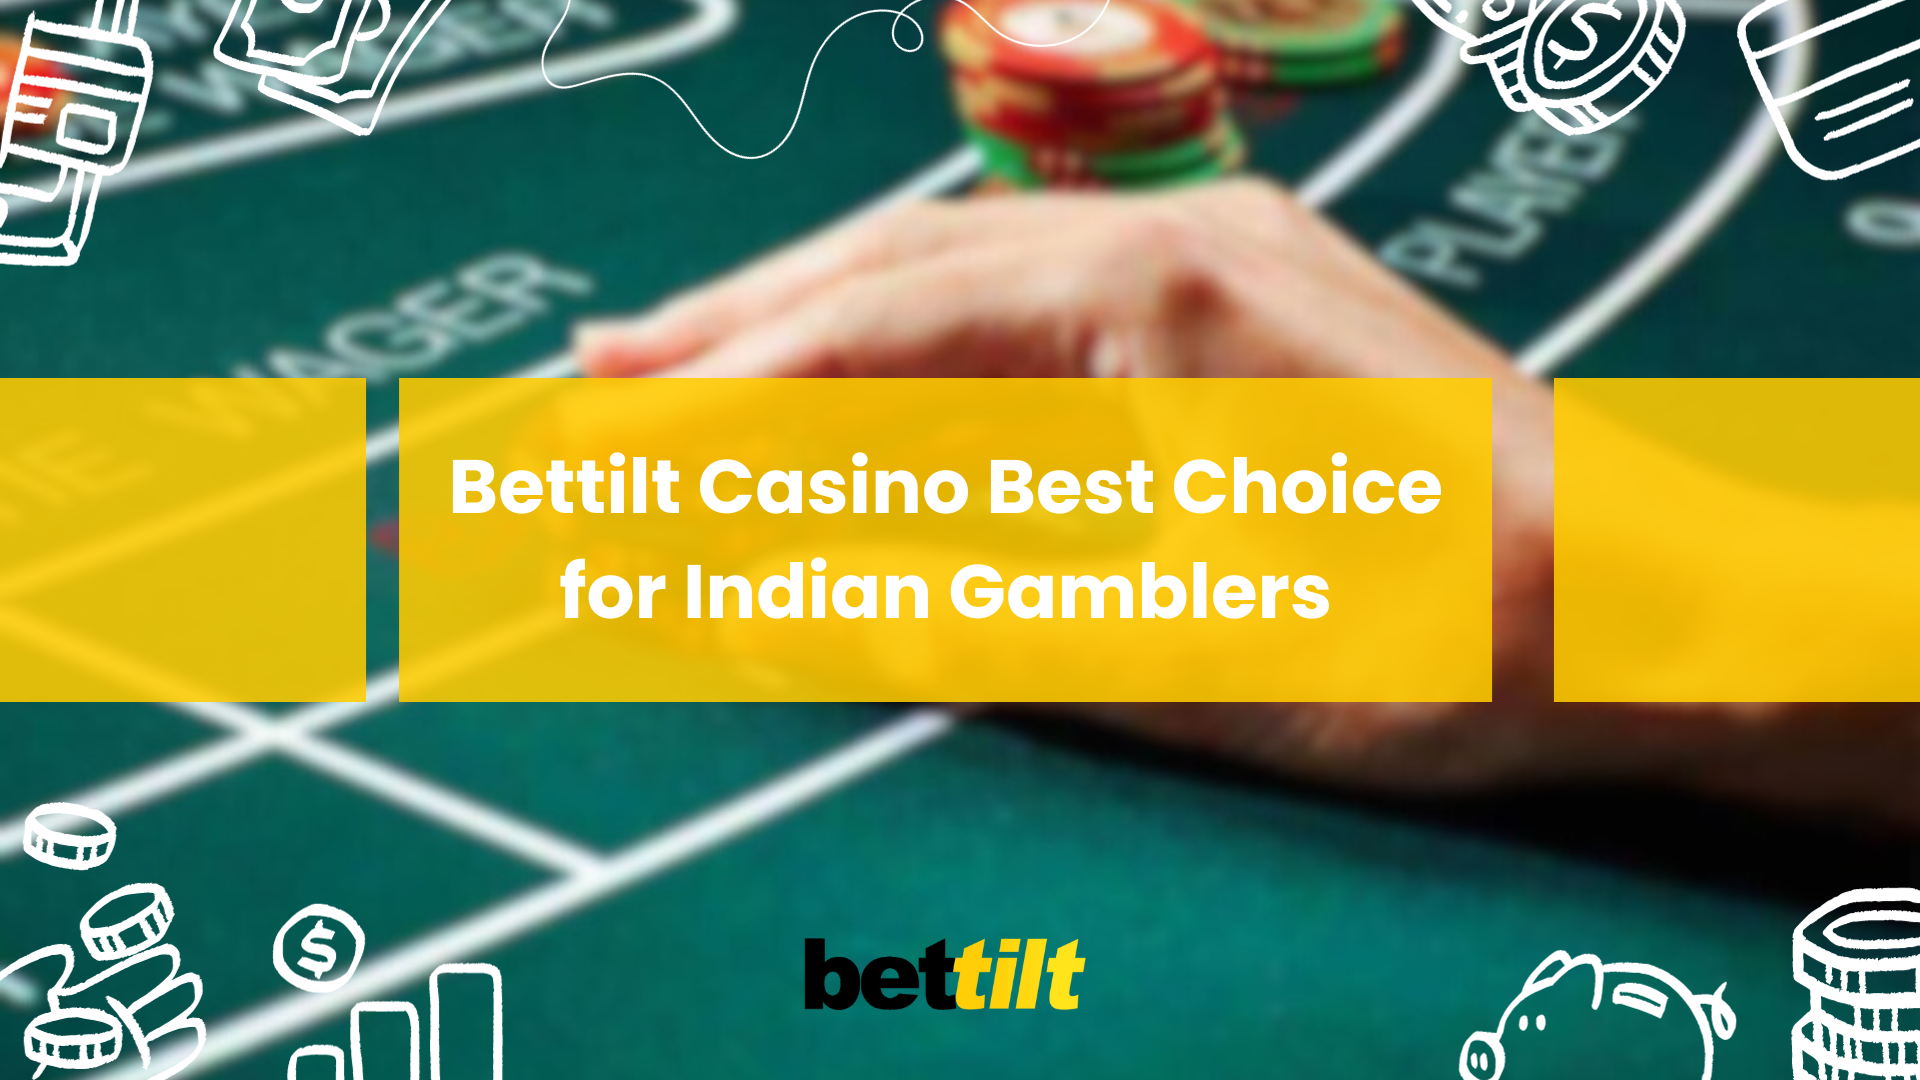 Bettilt Casino Best Choice for Indian Gamblers